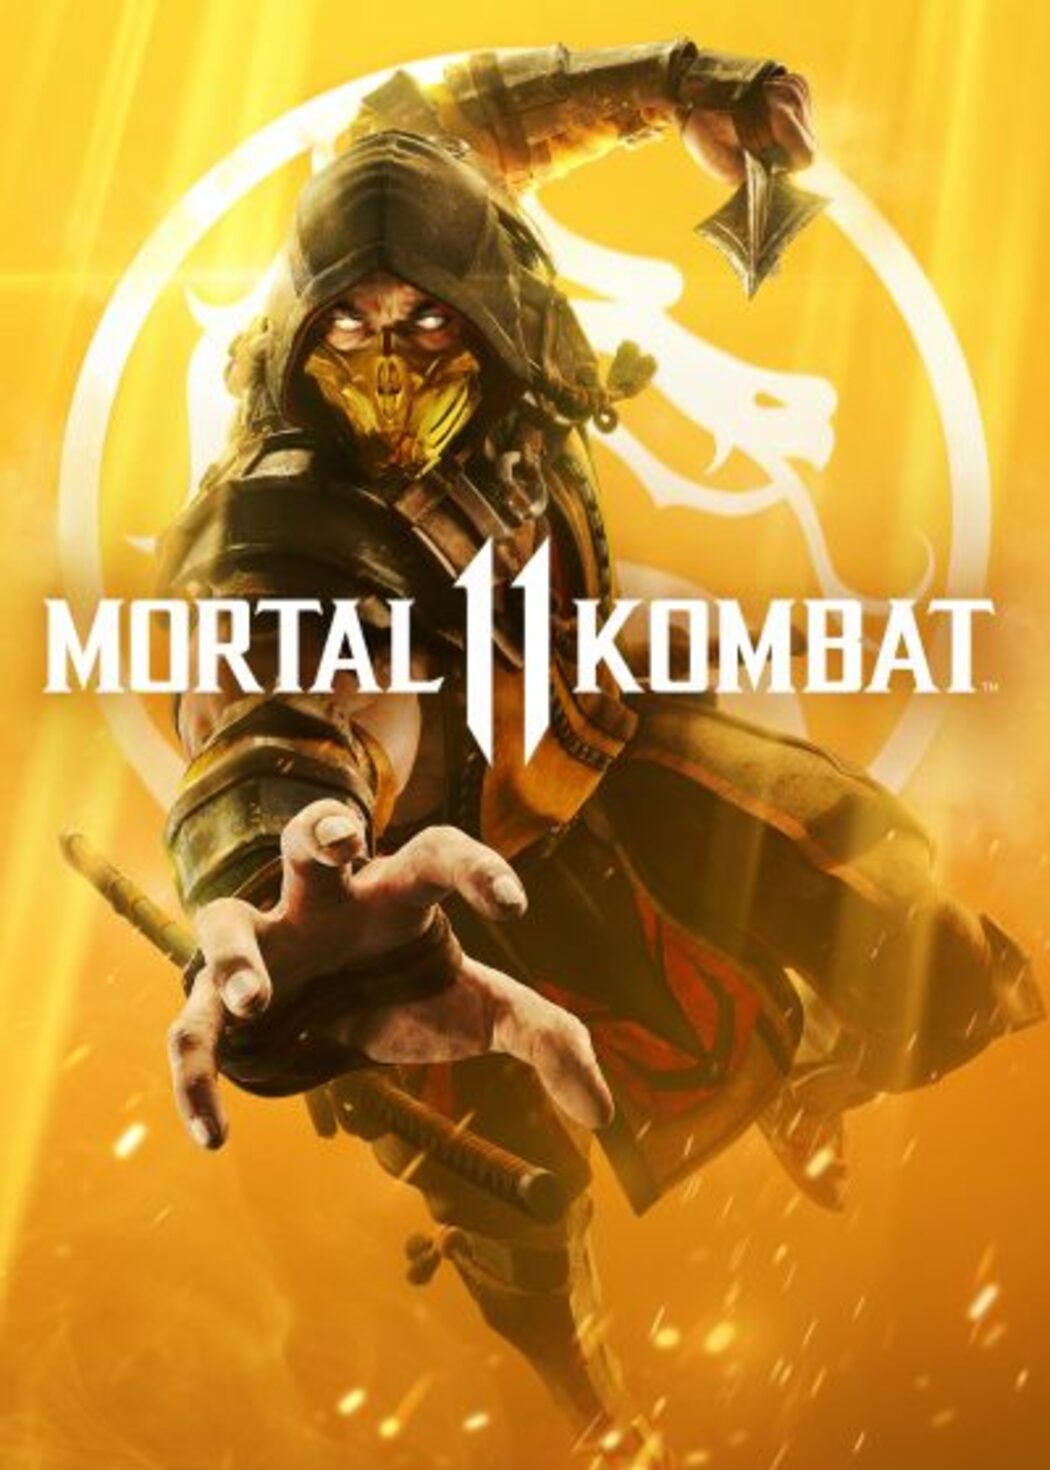 Buy Mortal Kombat 1 - Premium Edition PC Steam key! Cheap price